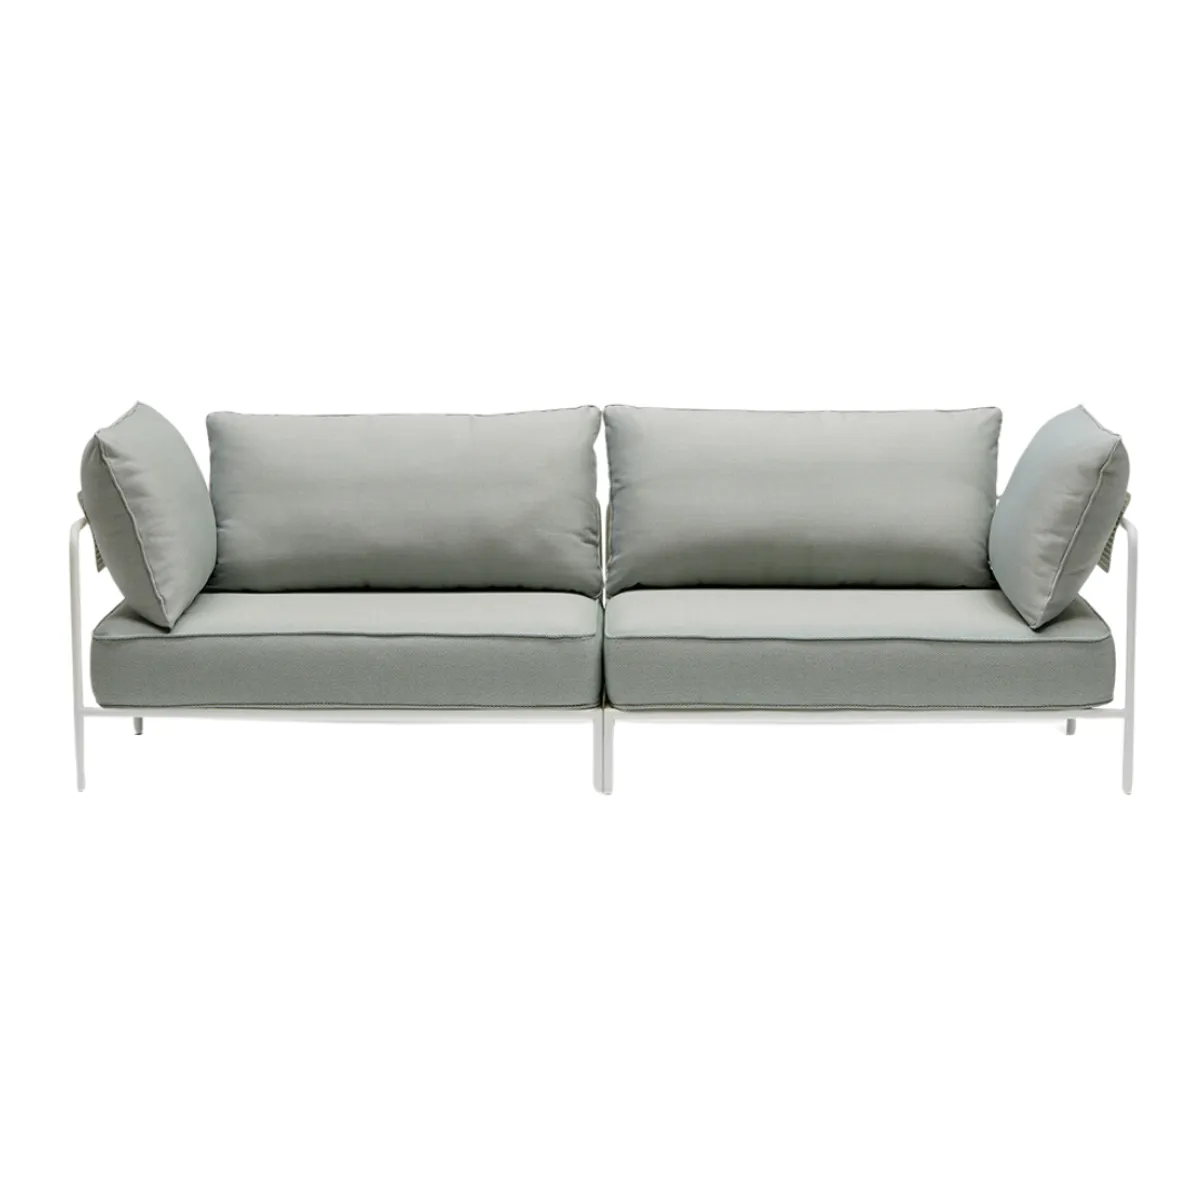 Dahlia modular sofa 2